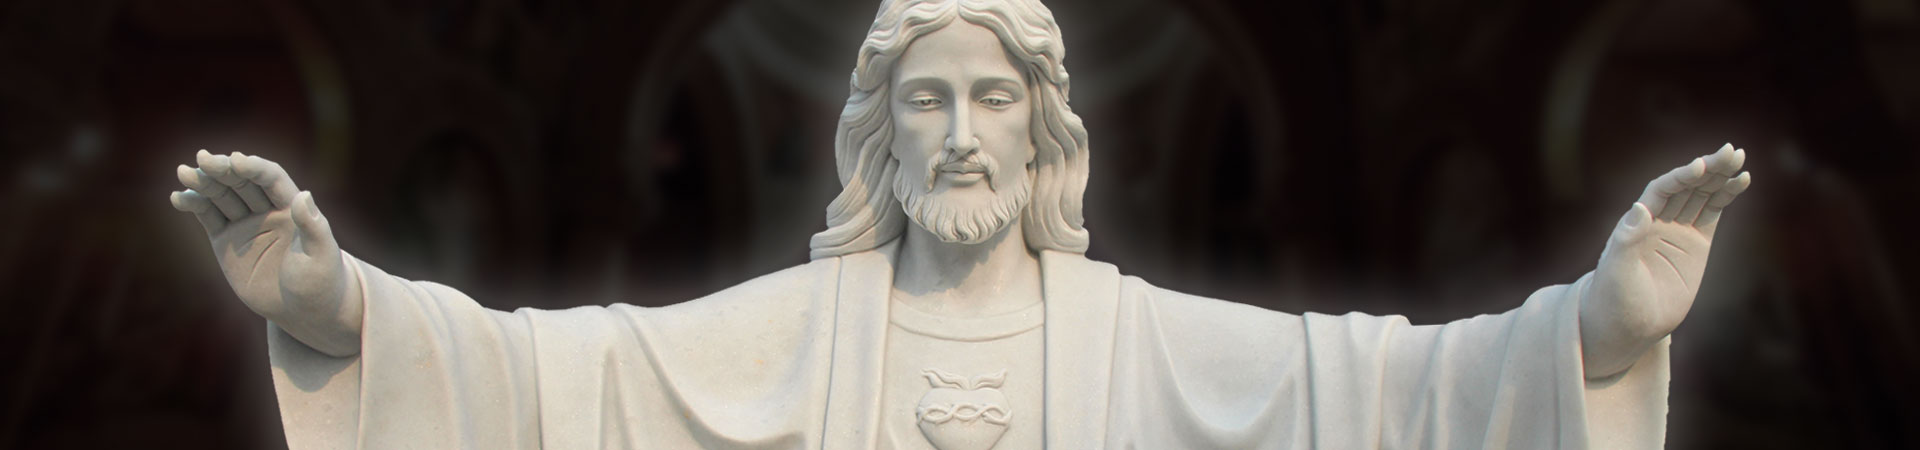 
mary holding jesus statue replica